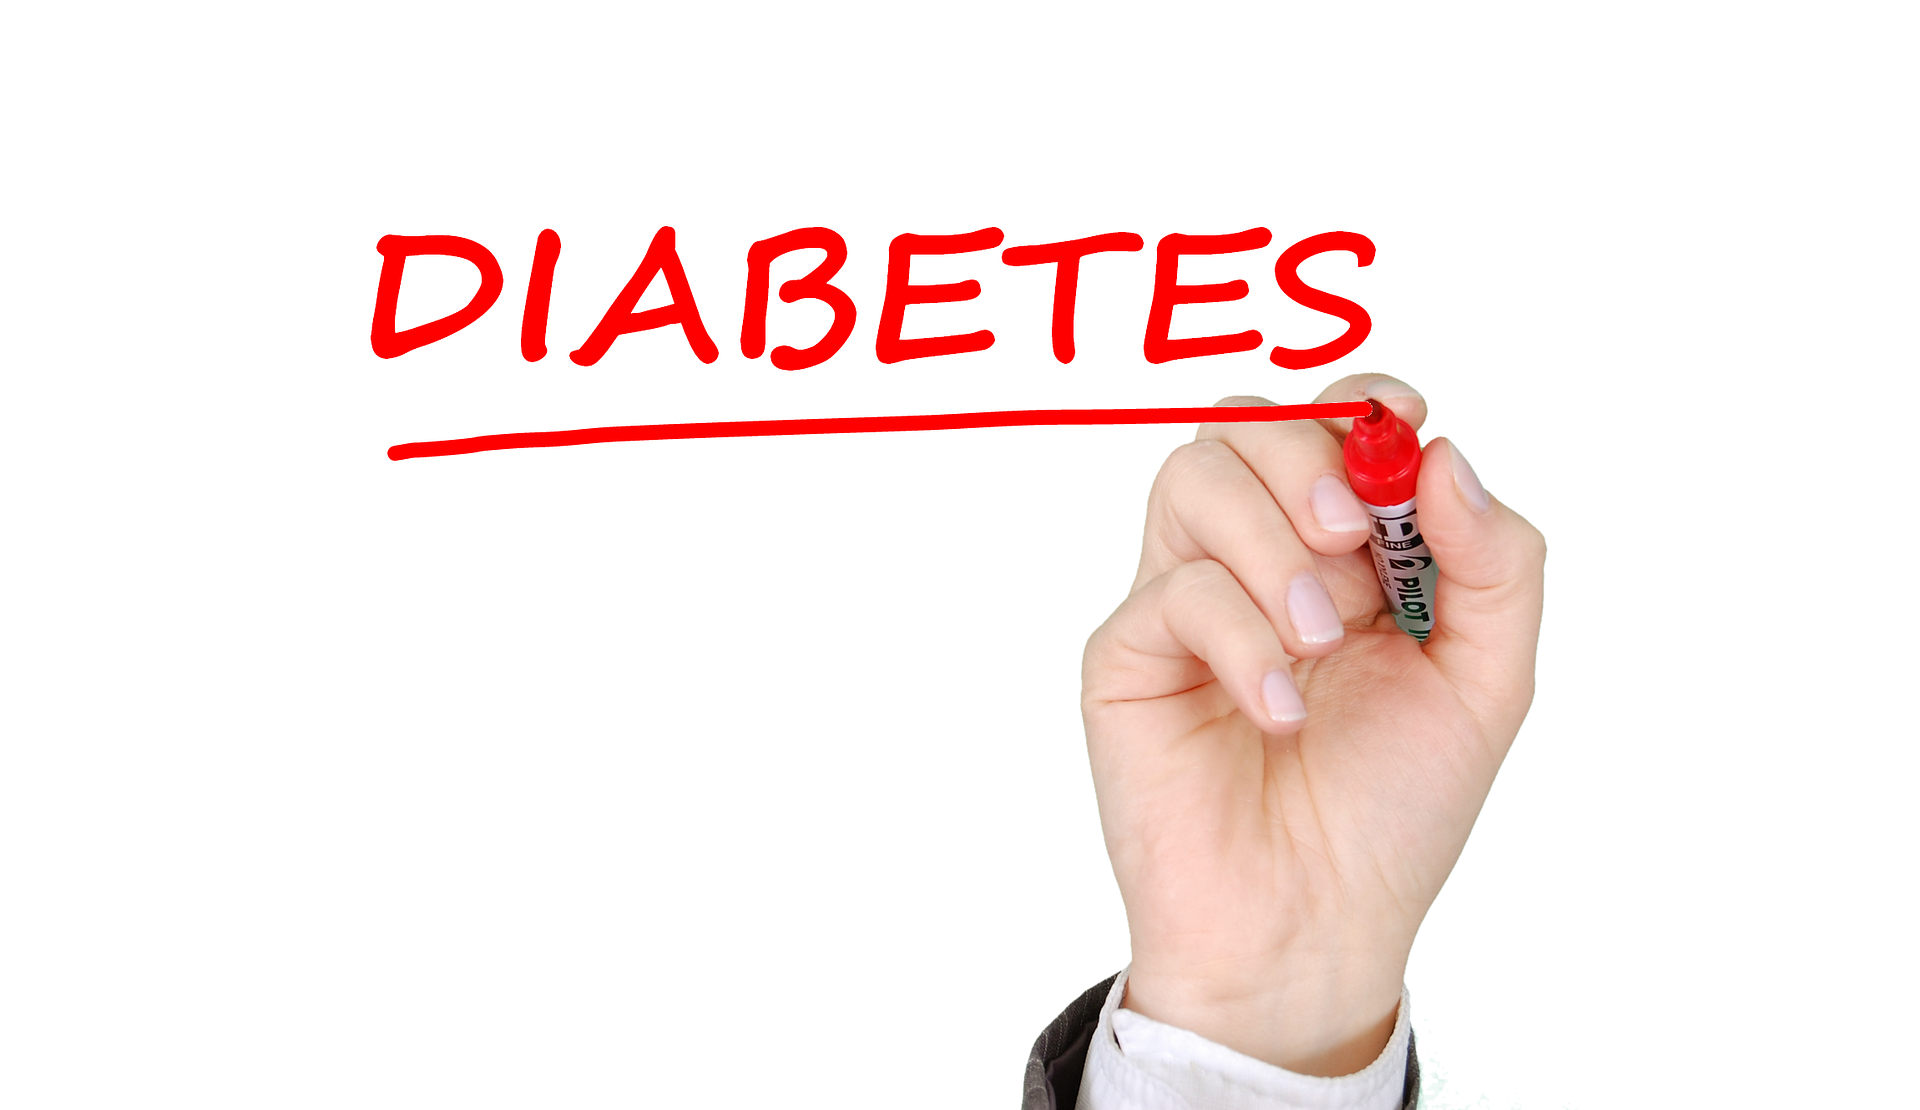 diabetes type 2 guideline